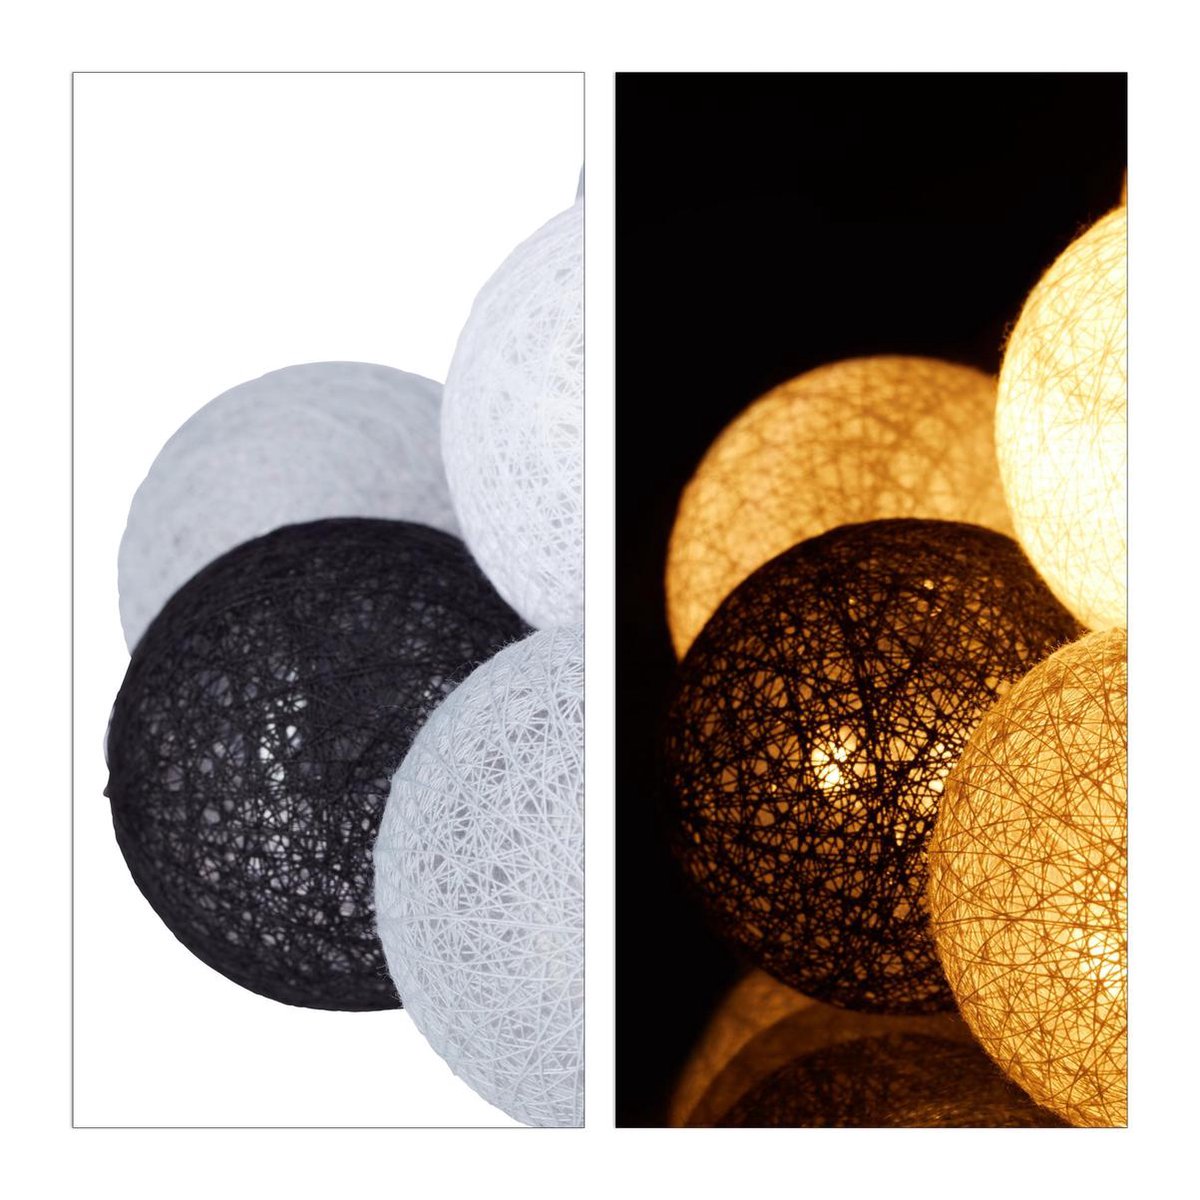 Relaxdays Guirlande Lumineuse LED, 10 Boules Coton, Fonction Piles